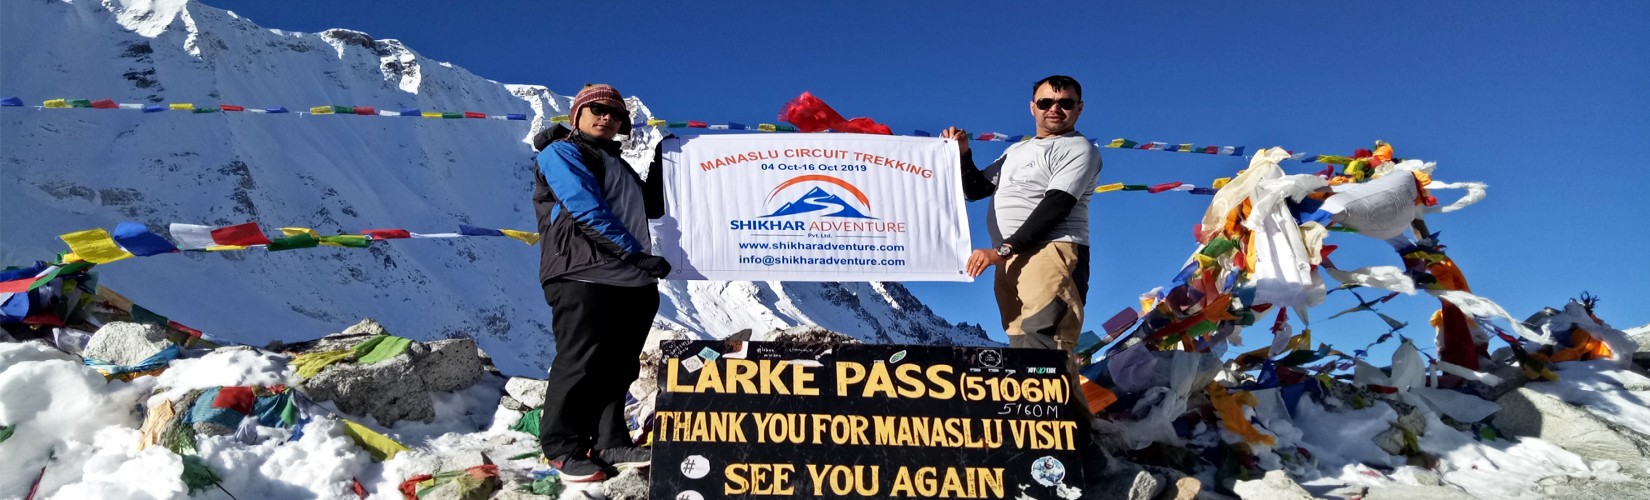 Larkya Pass - Highest Point on Manaslu Circuit Trek